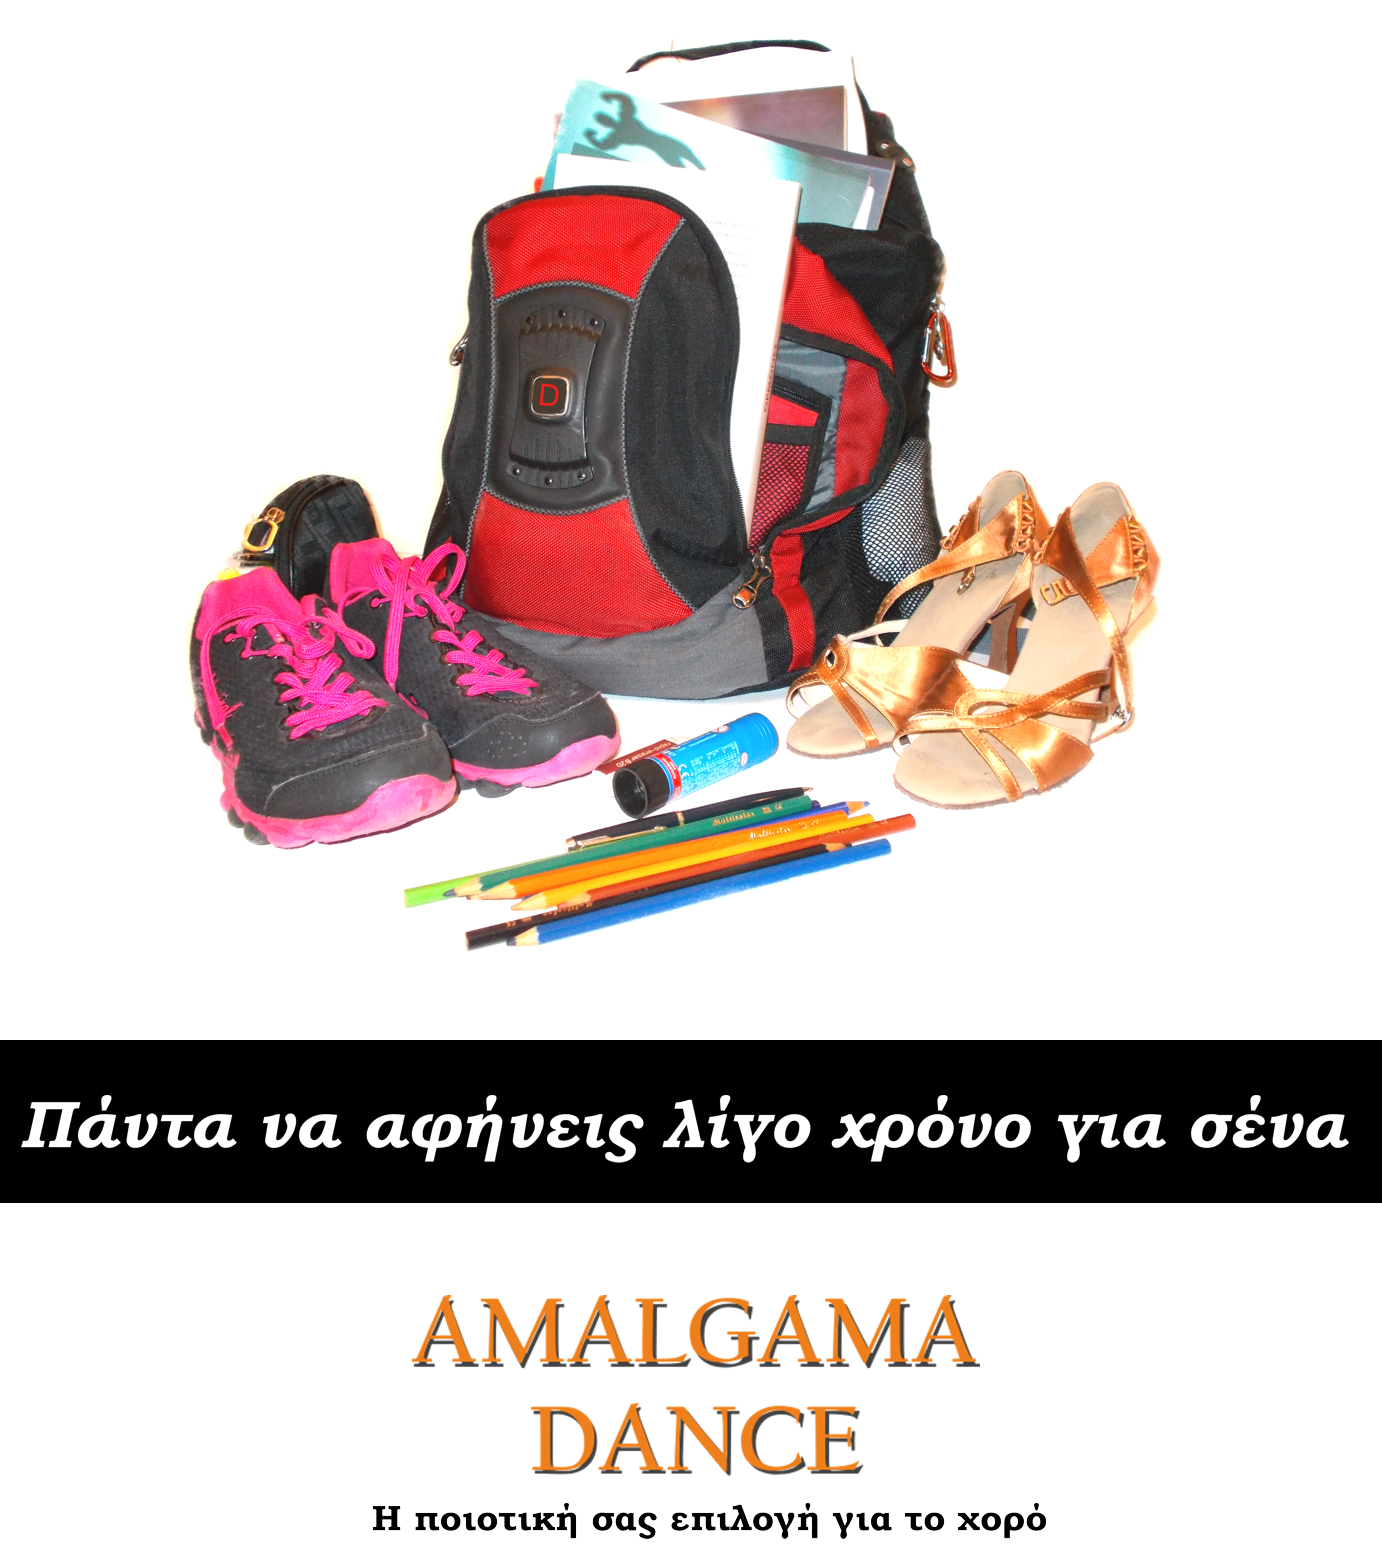 AMALGAMA DANCE SCHOOL PIRAEUS GREECE